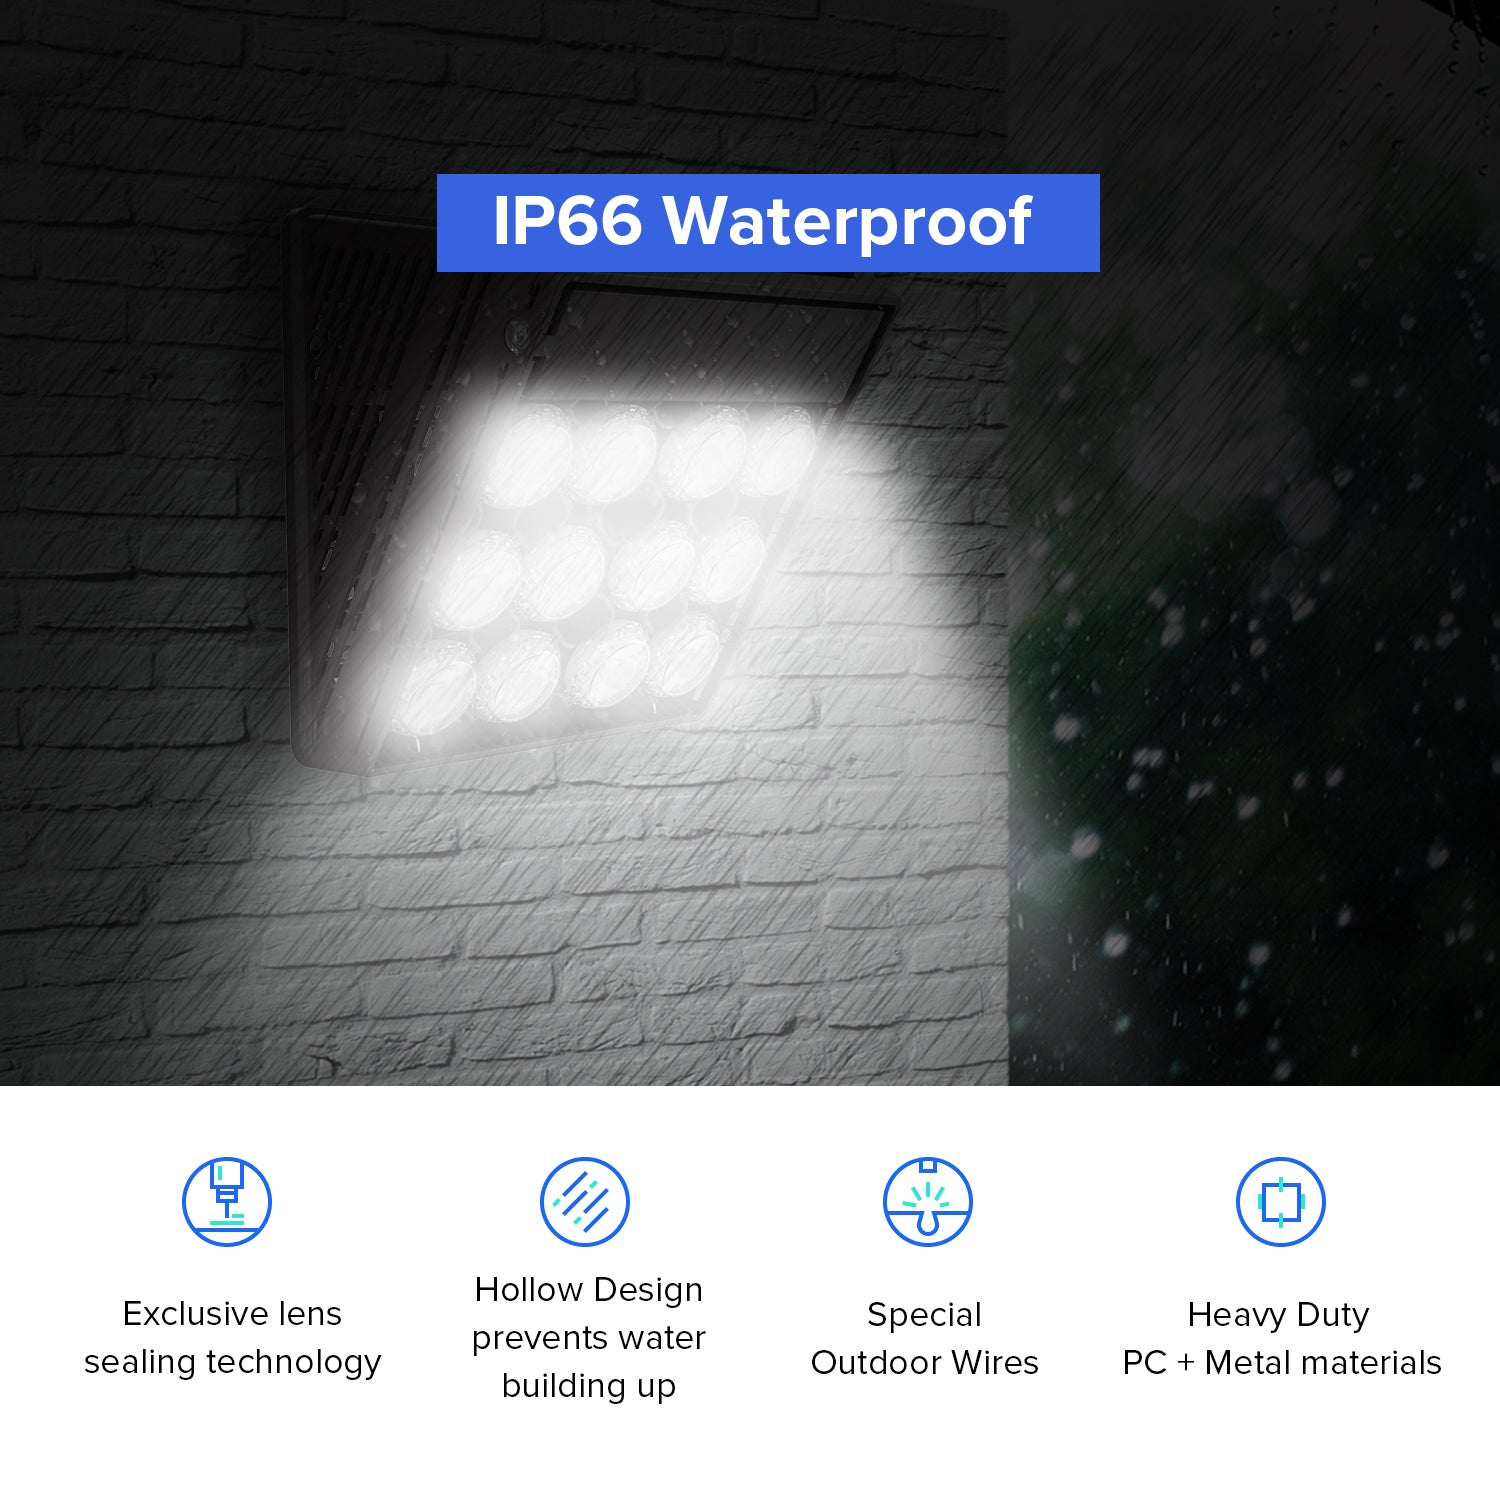 70W LED Wall Pack Light is IP66 waterproof.